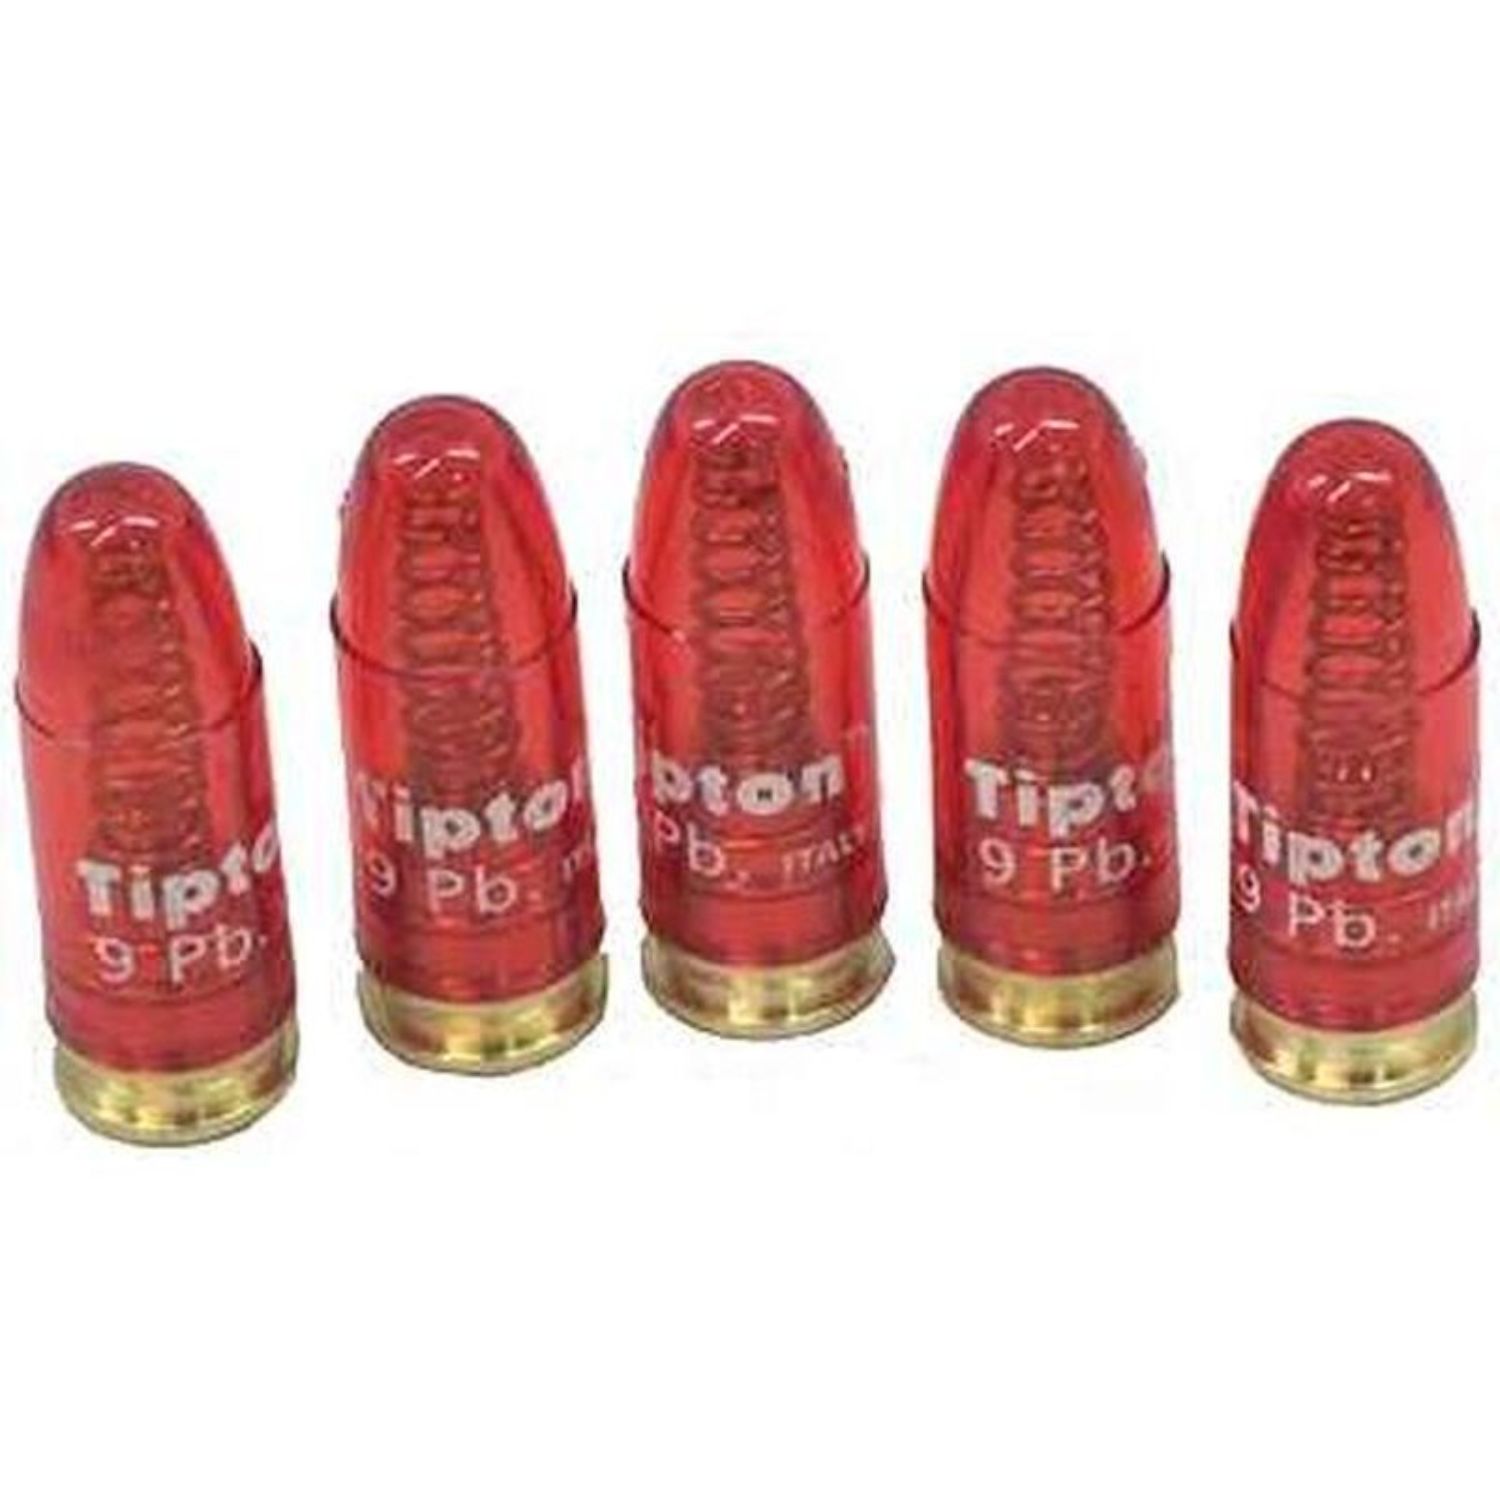 Tipton Snap Caps  <br>  Pistol 9 mm. Luger 5 Pk.